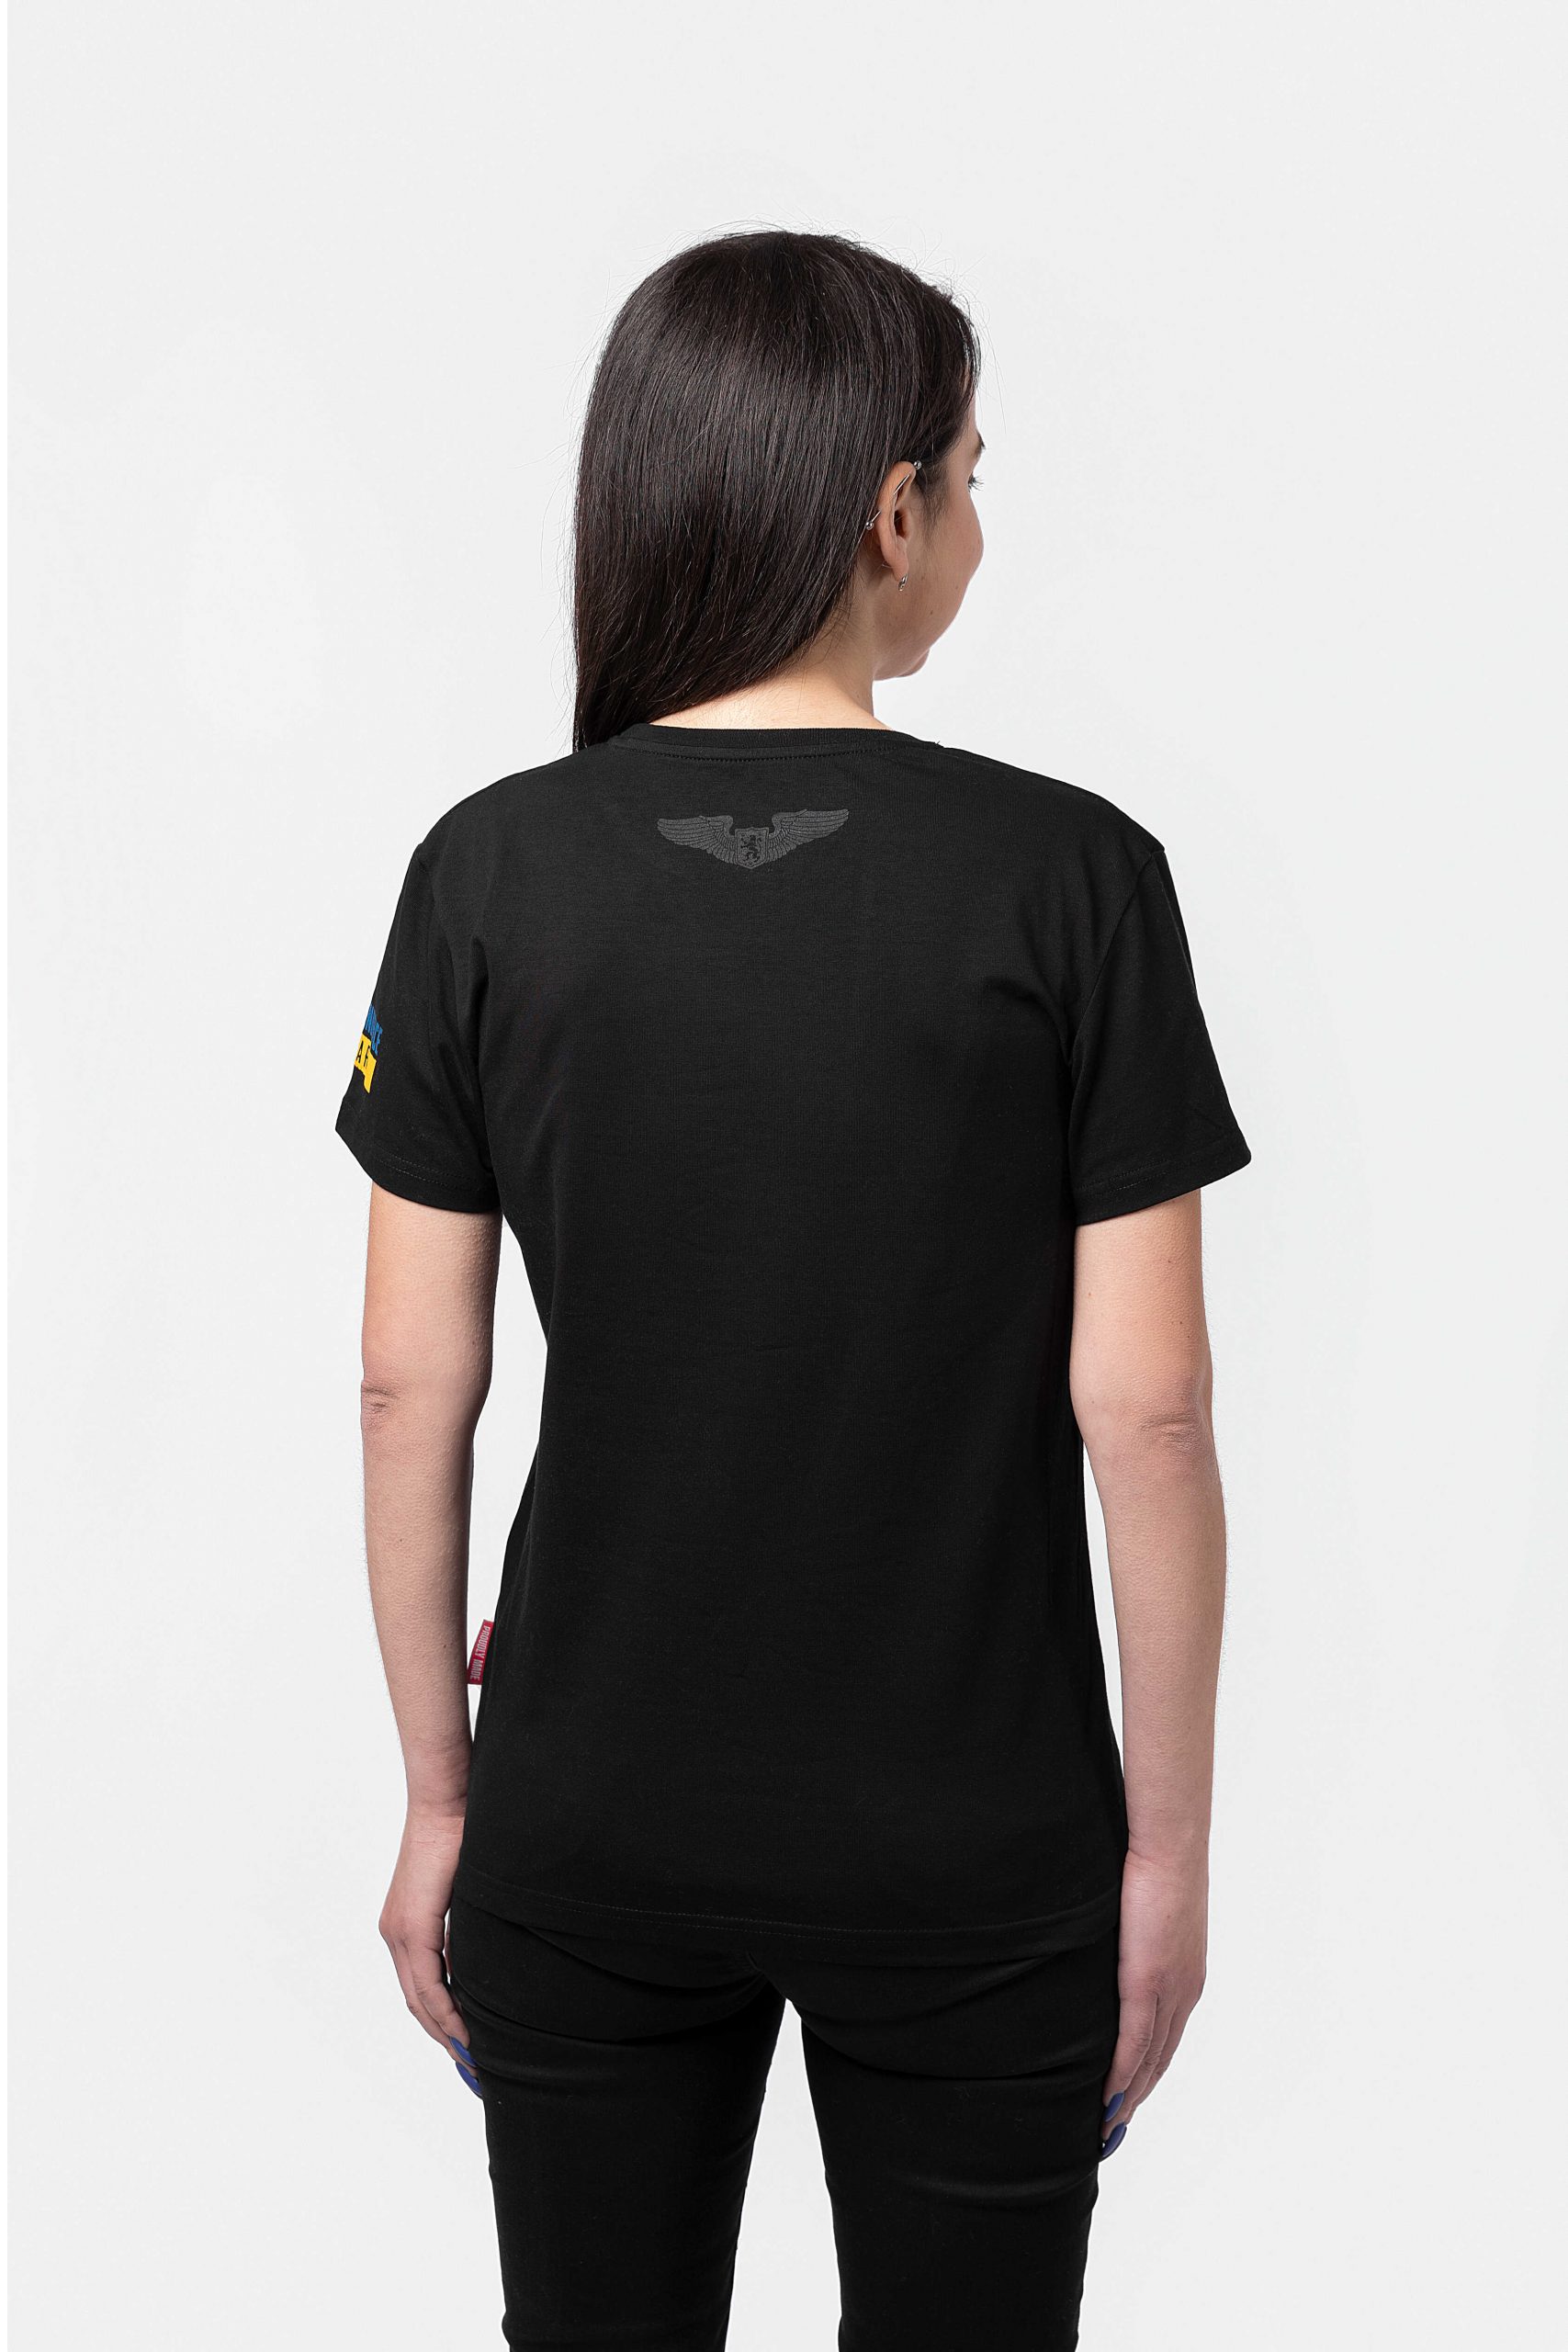 Women's T-Shirt Tank. Color black. 1.